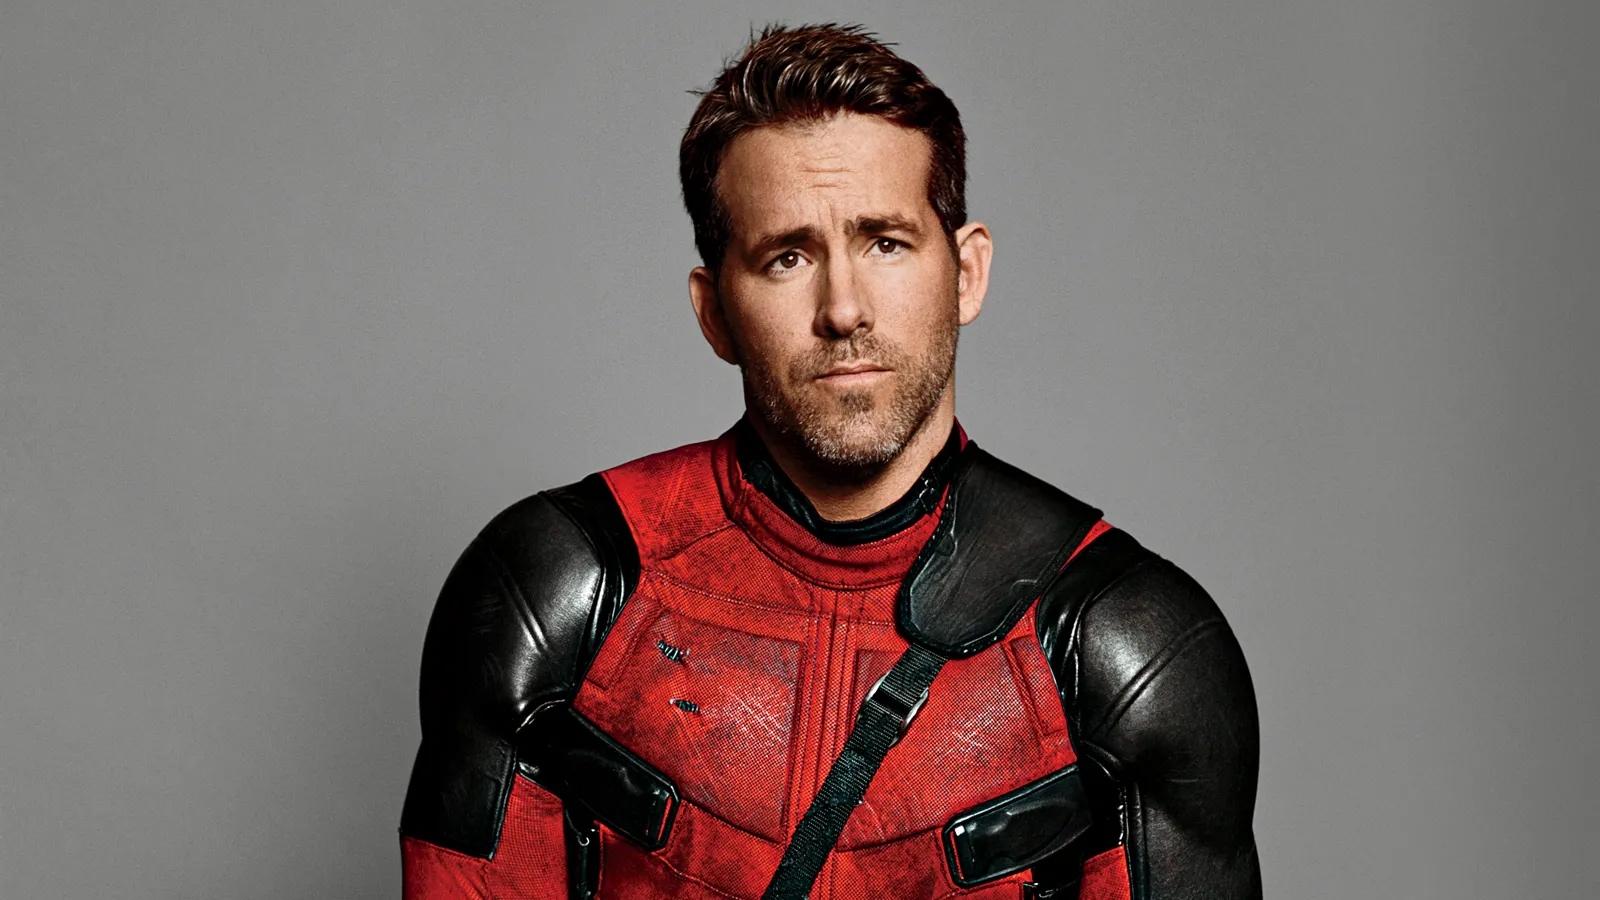 Ryan Reynolds as comic book character Deadpool